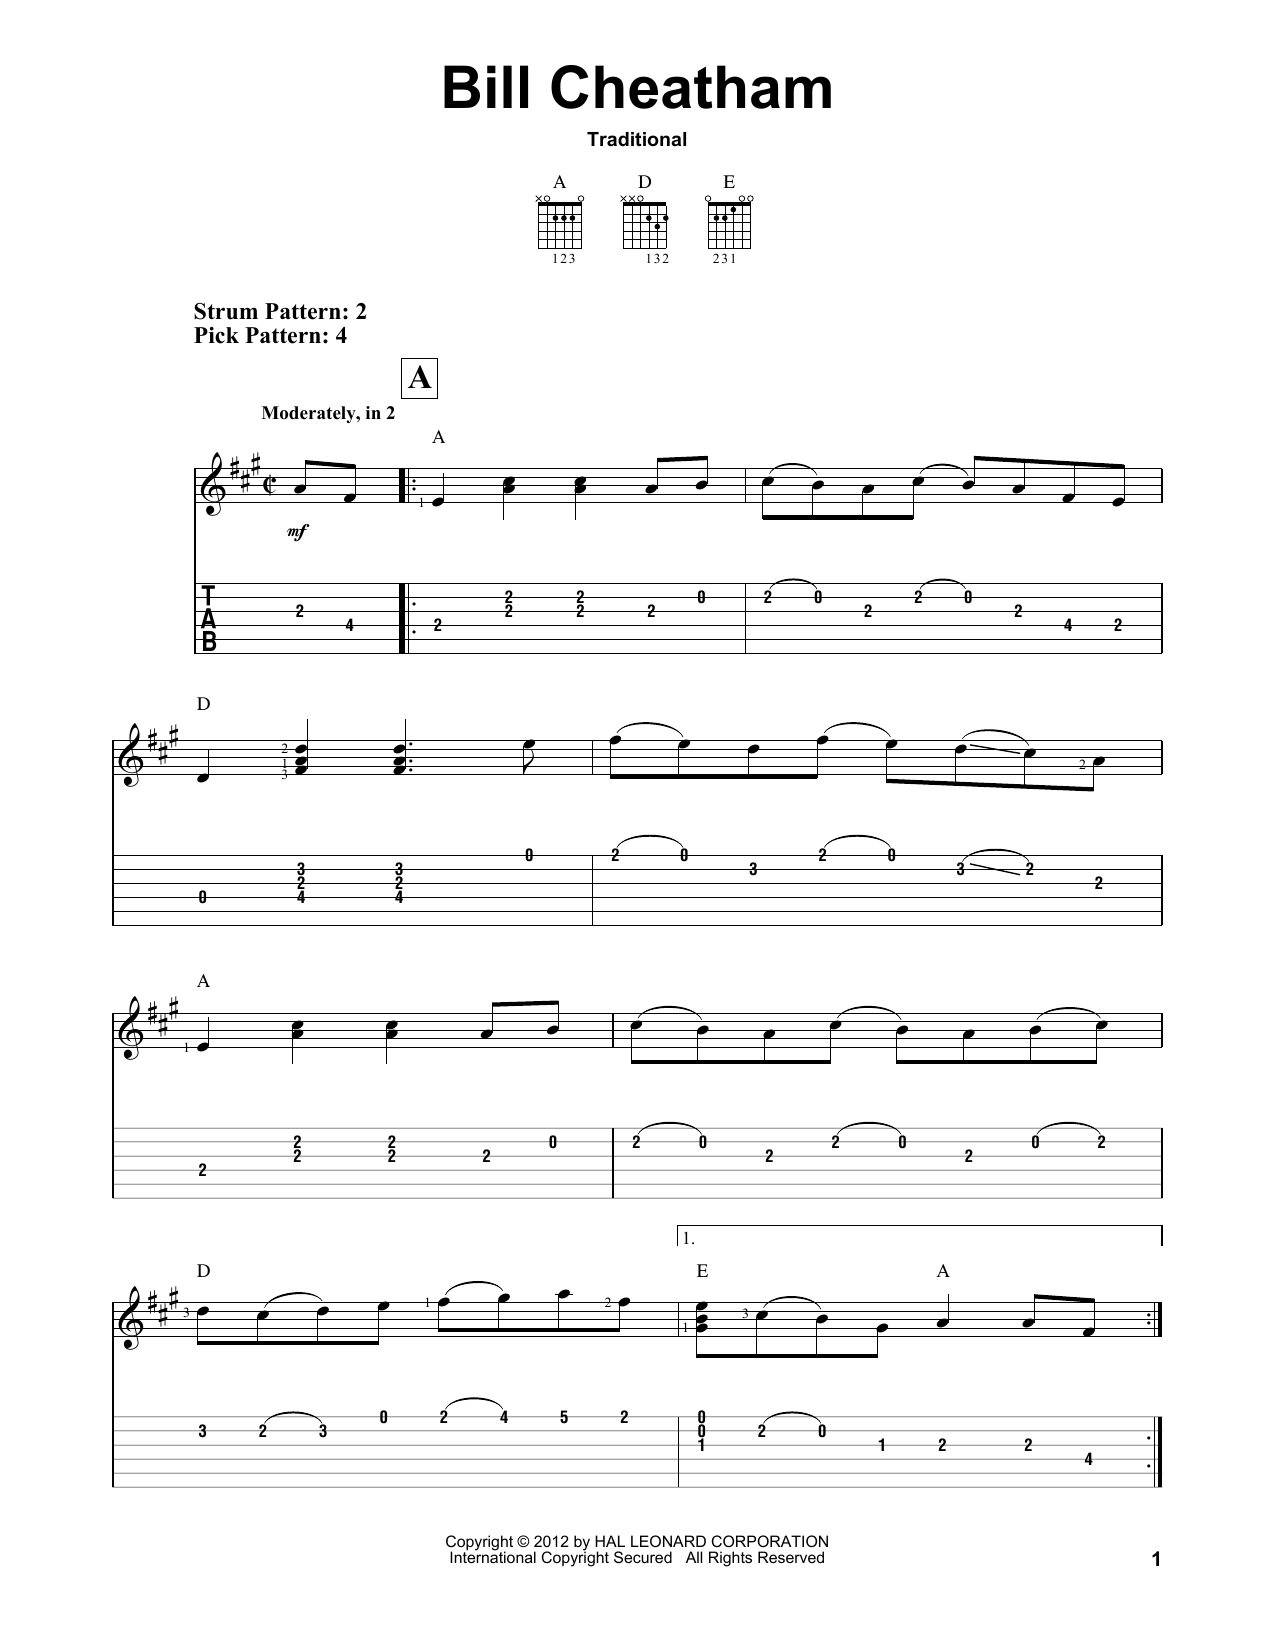 Traditional Bill Cheatham Sheet Music Notes & Chords for Real Book – Melody, Lyrics & Chords - Download or Print PDF